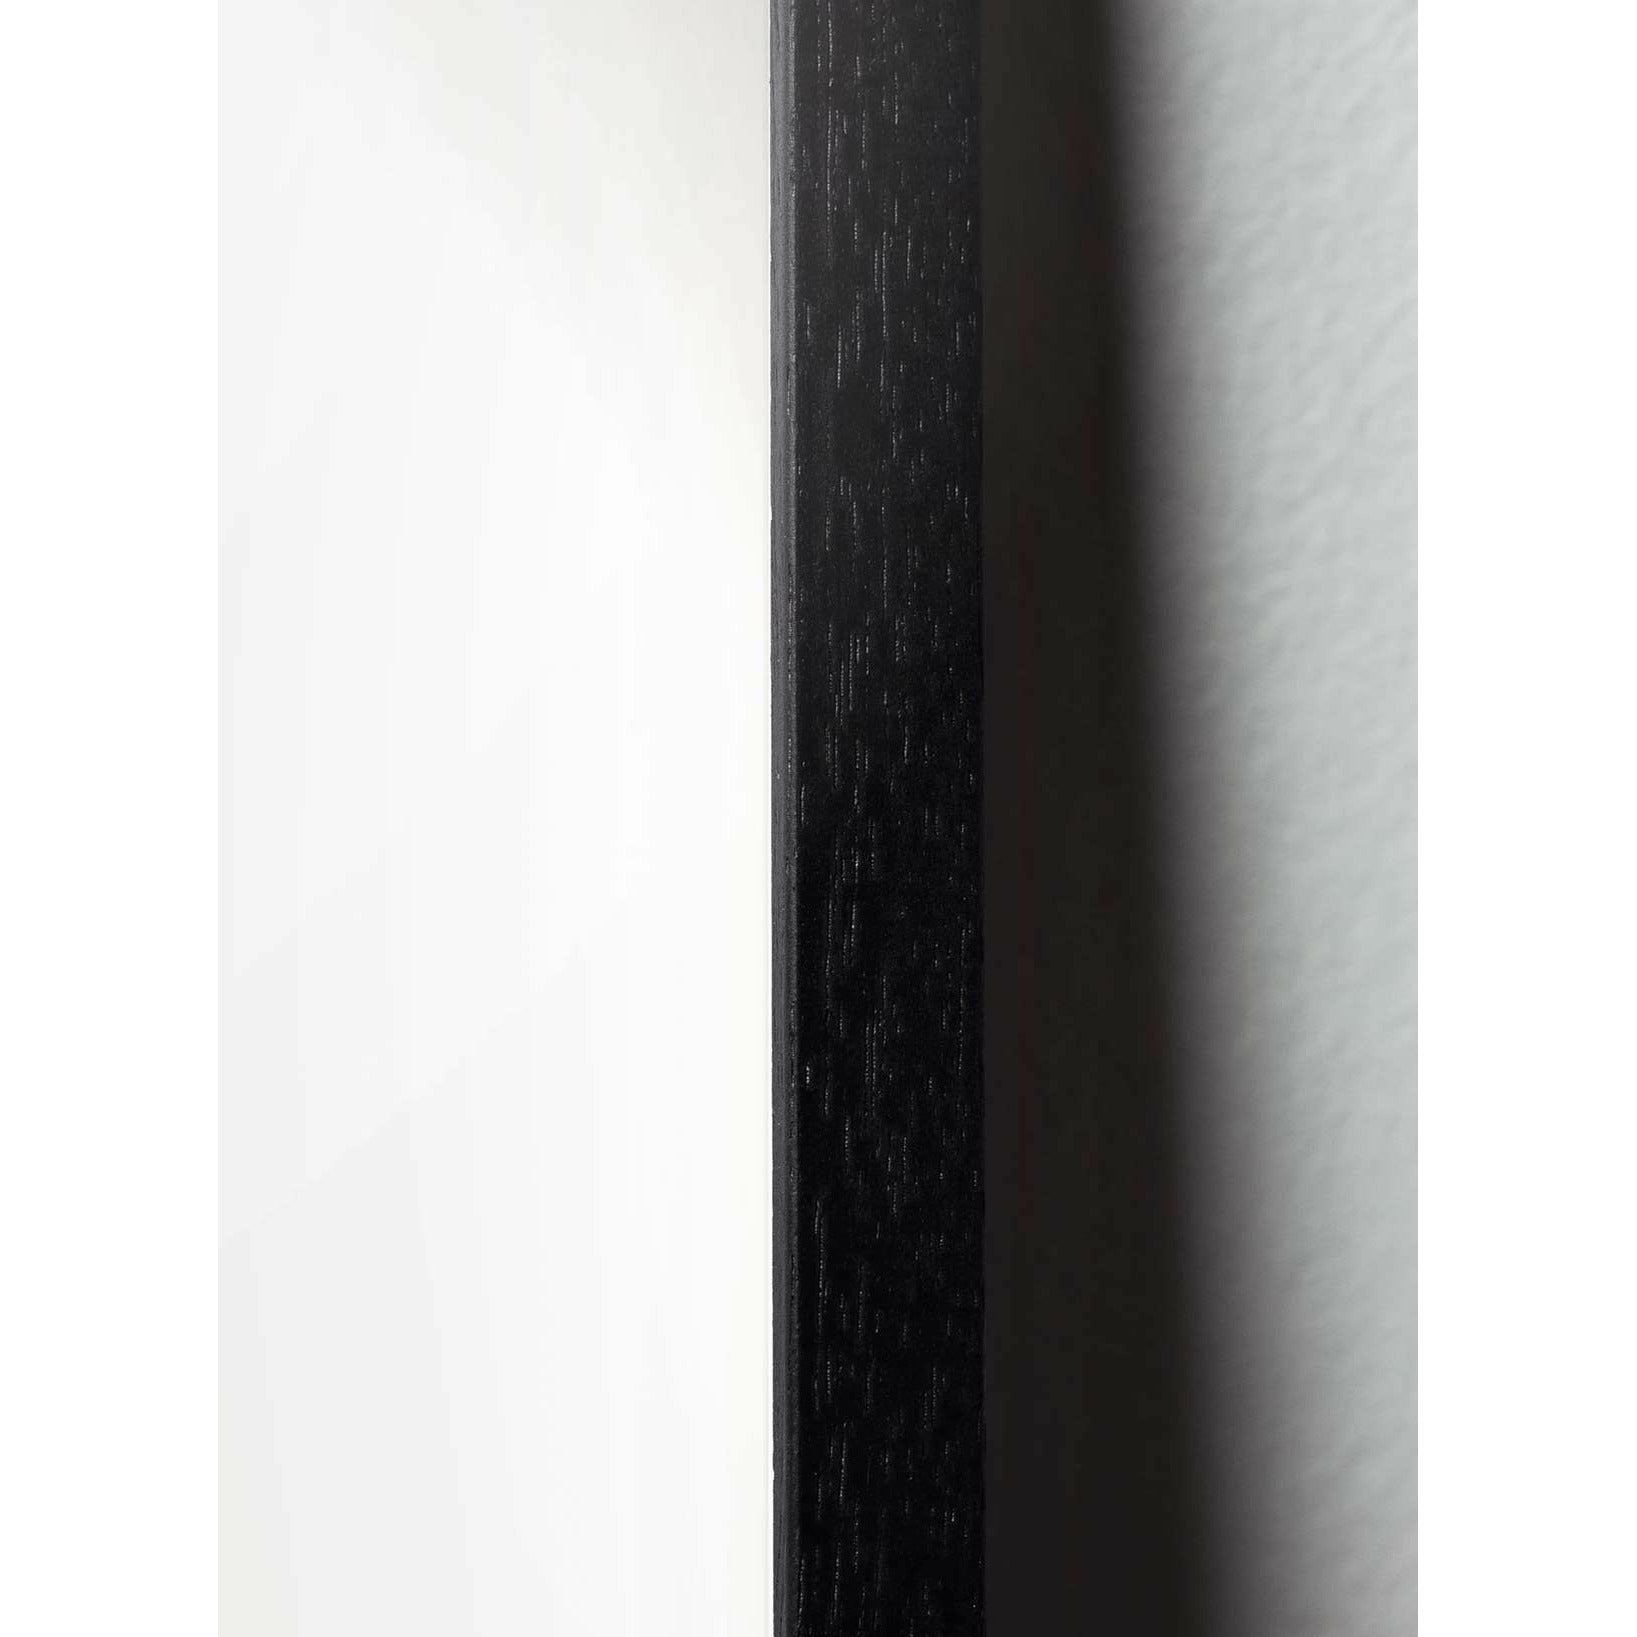 Brainchild Blumentopf Design Icon Poster, Rahmen aus schwarz lackiertem Holz 50x70 Cm, grau